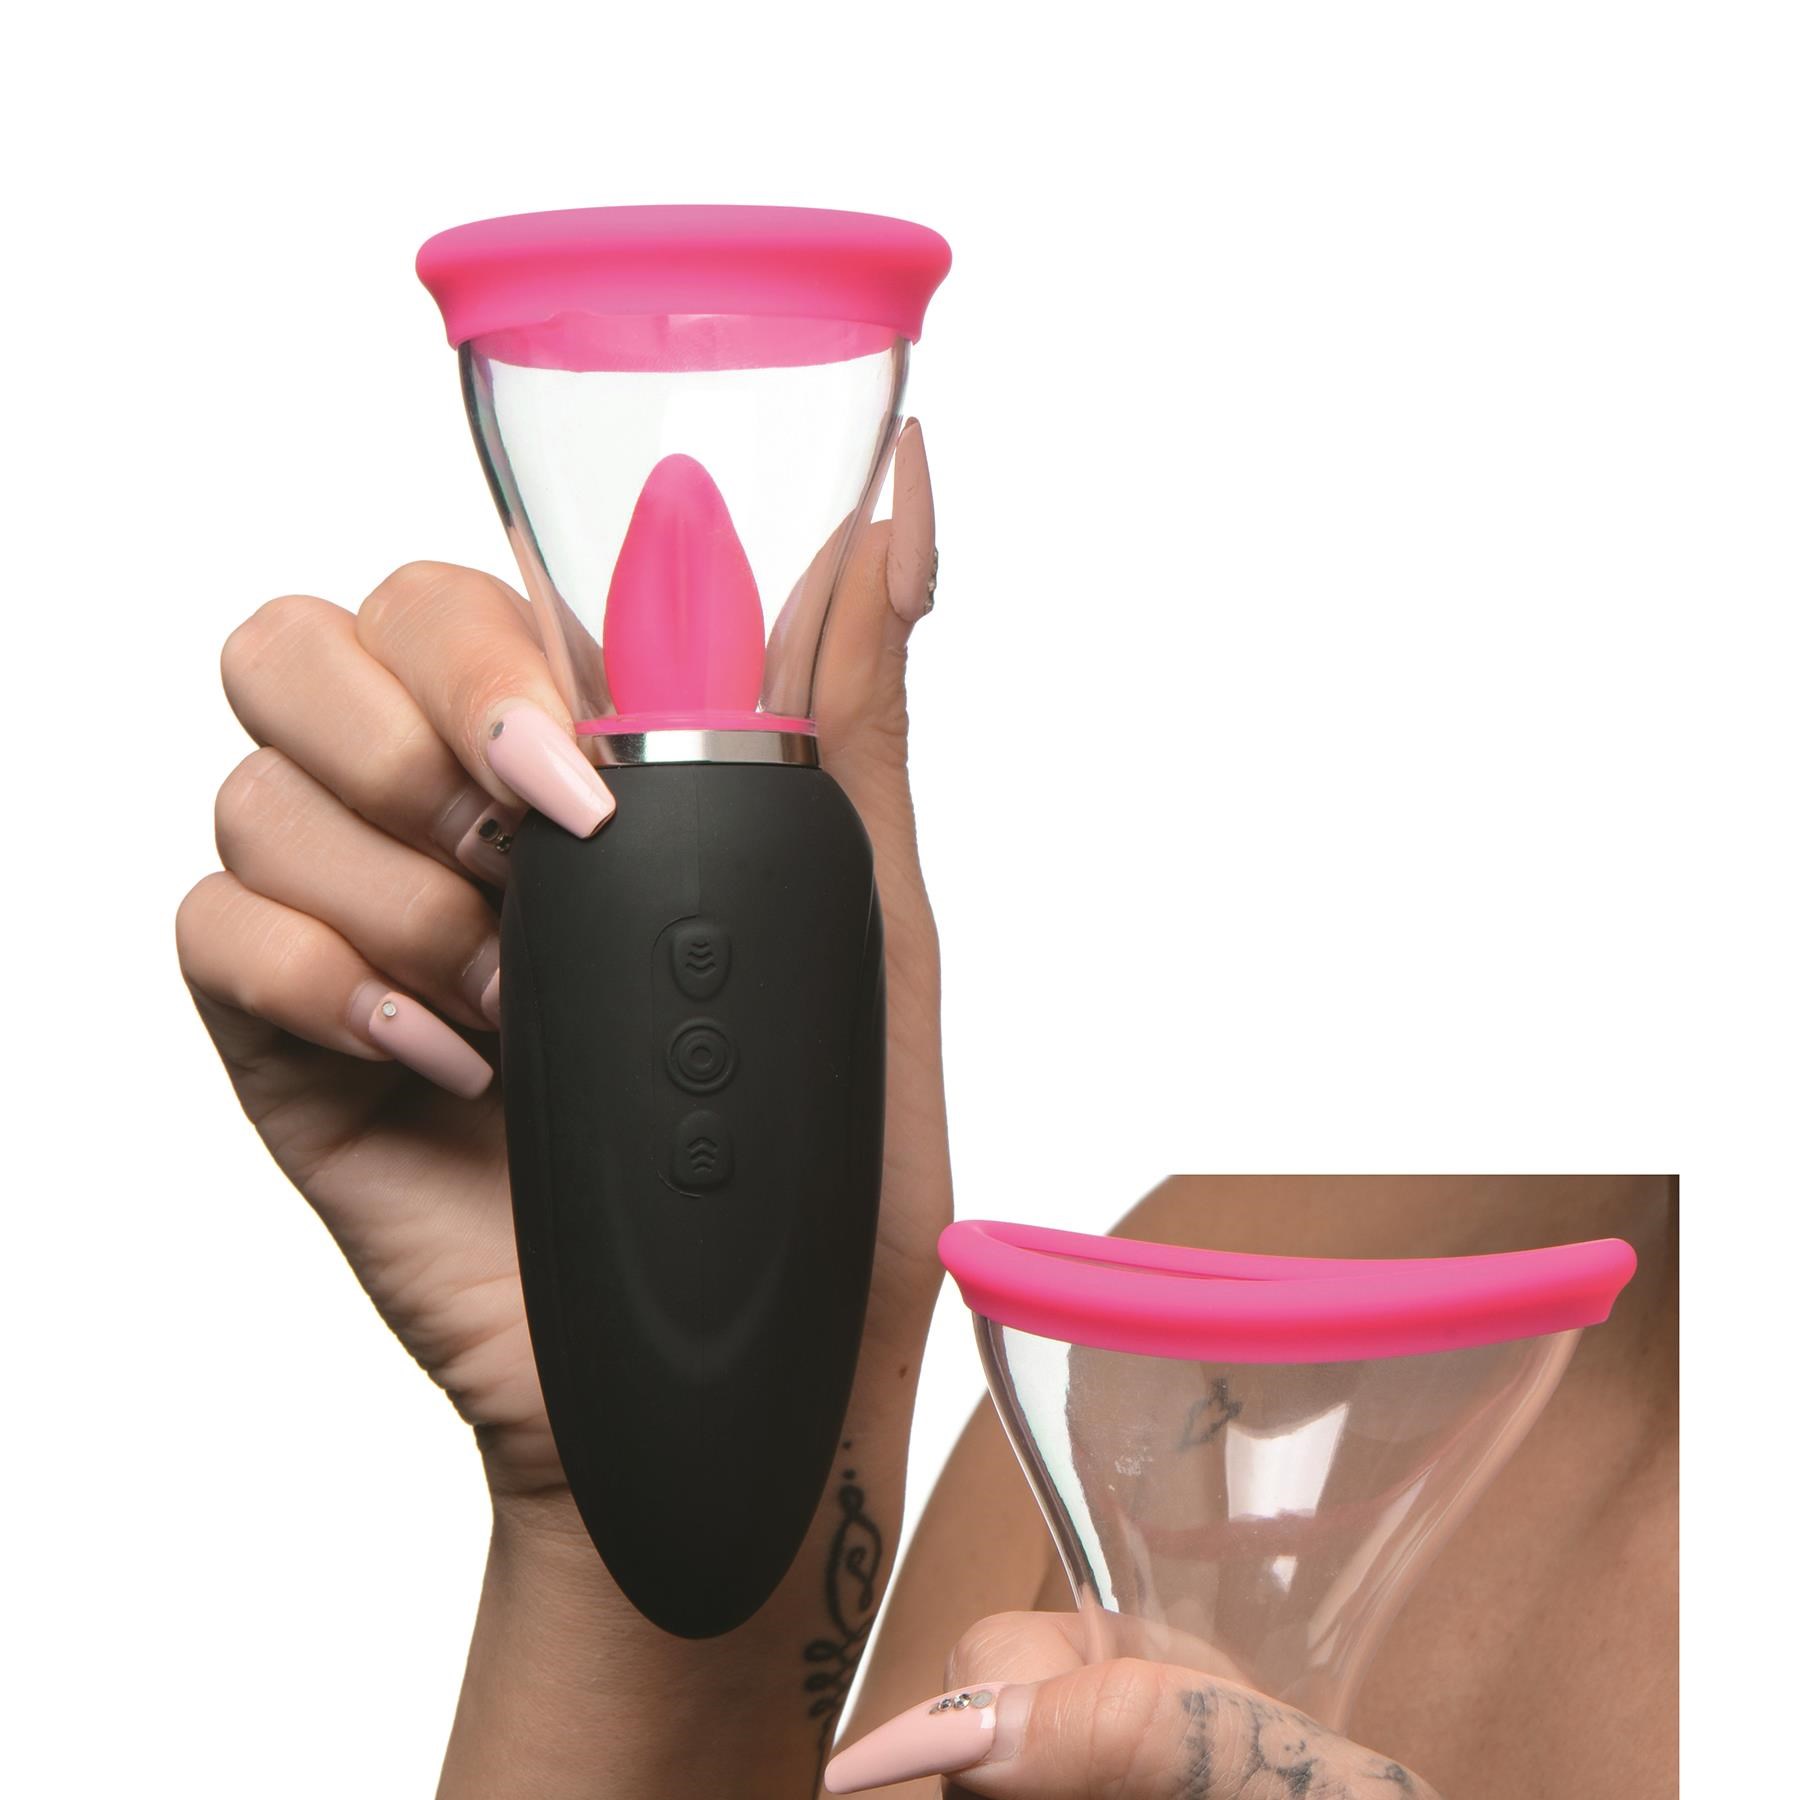 Shegasm Lickgasm Mini Pussy Pump - Hand Shot to Show Size